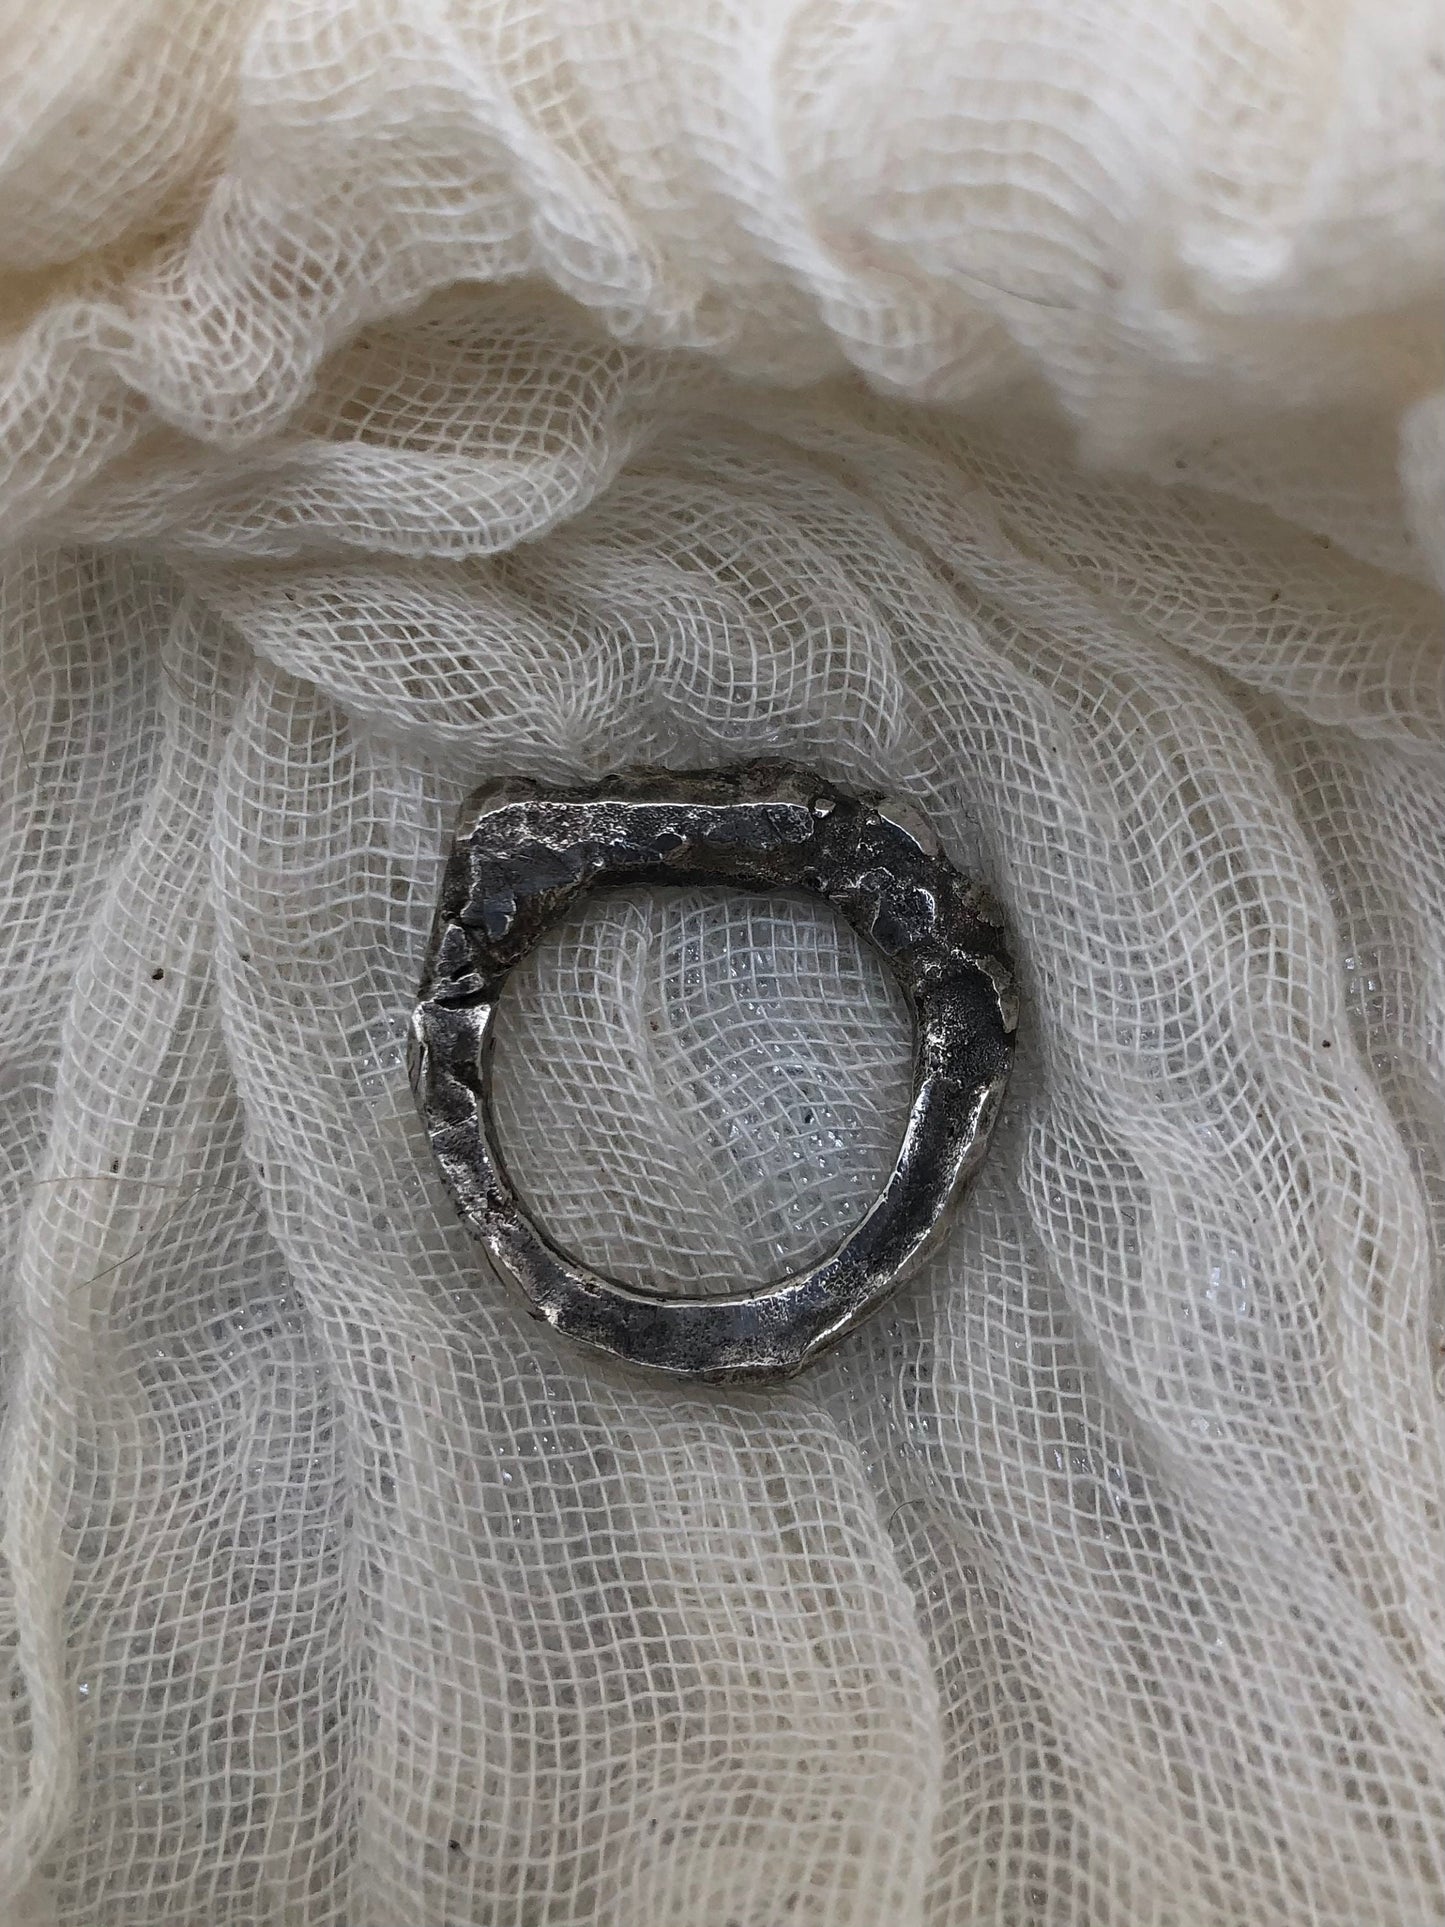 Rock Biter bench cast argentium silver ring